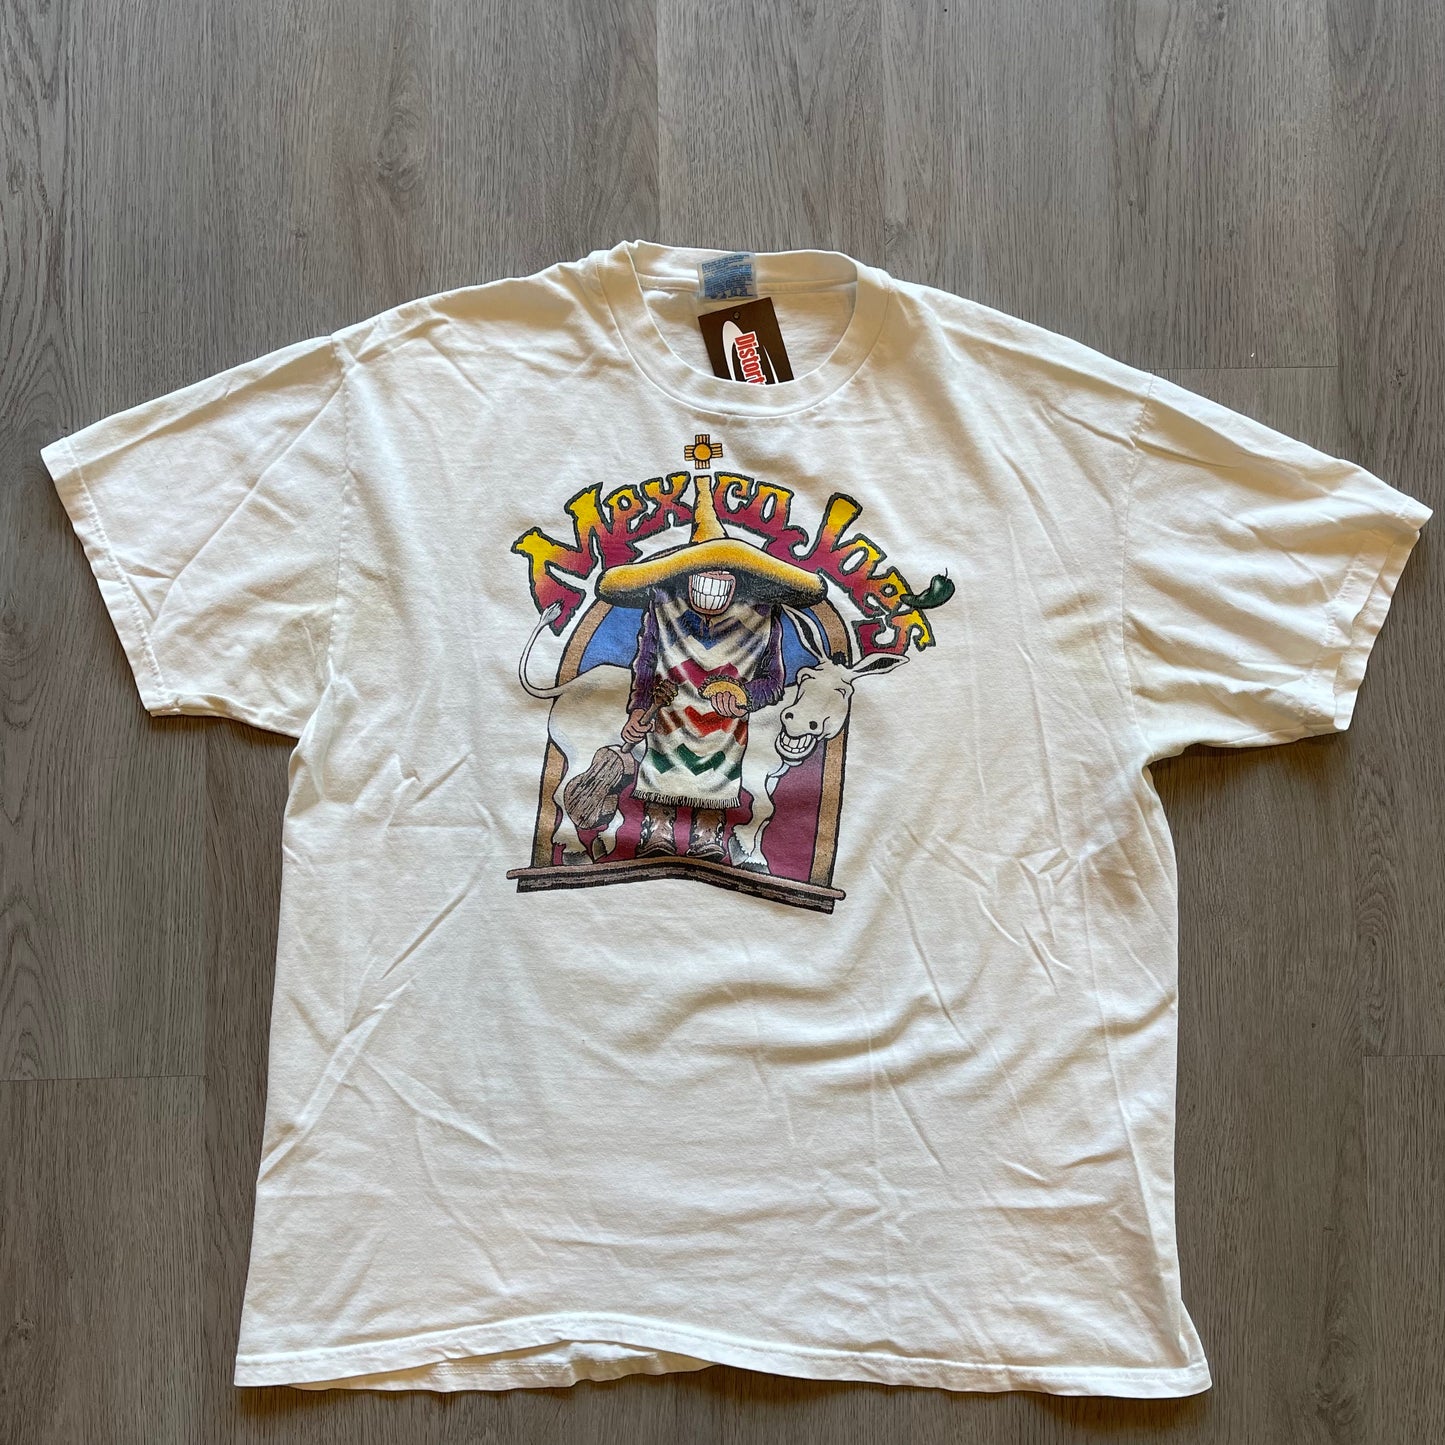 Mexico Joes Vintage T-shirt